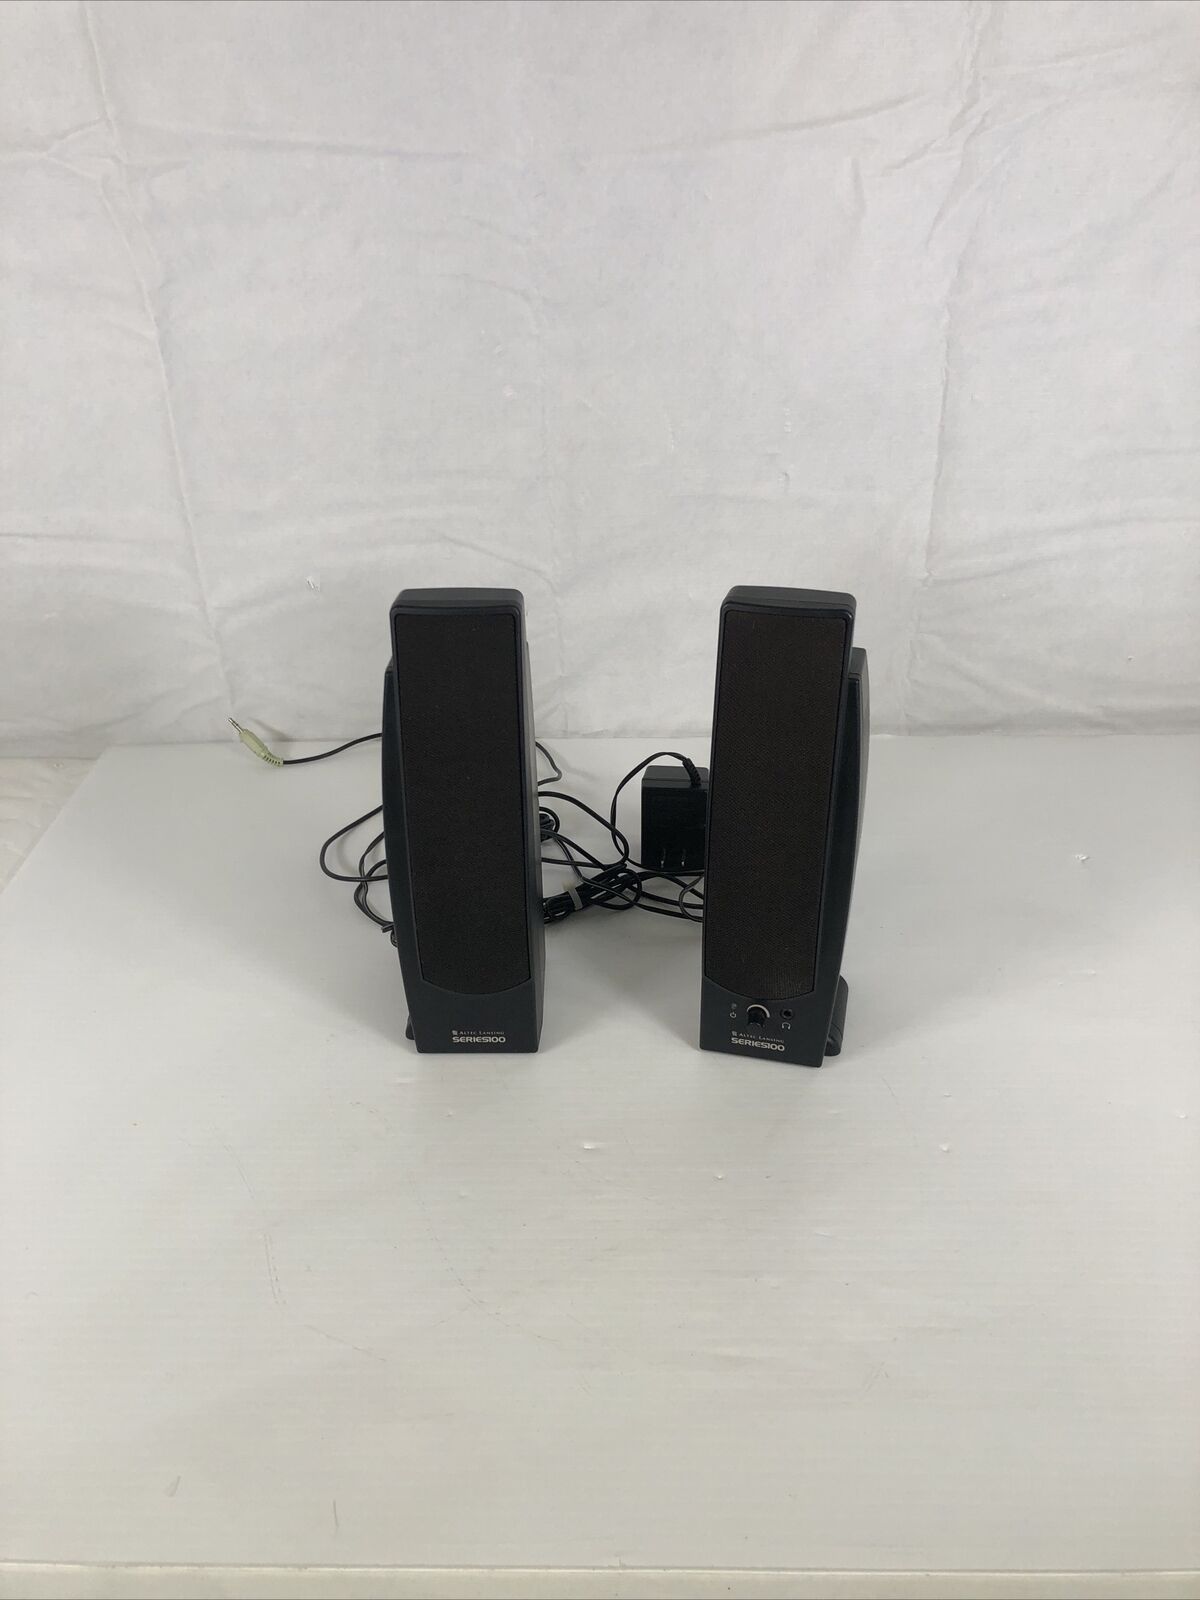 Altec Lansing computer speakers Series 100 Powered Audio Tested, Works